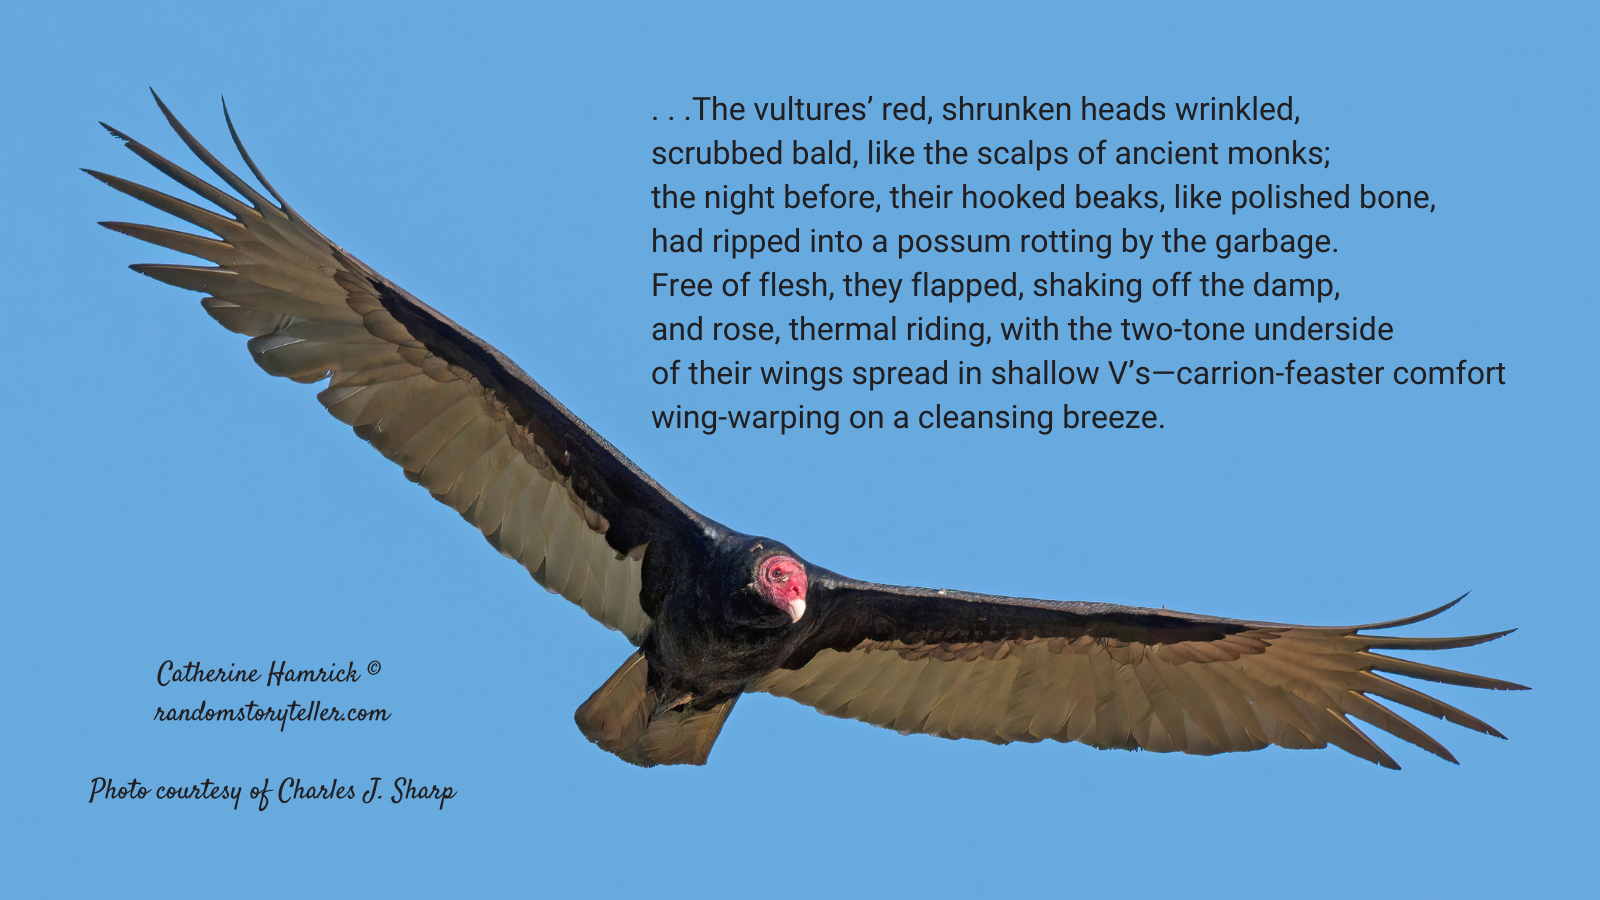 Poem excerpt from 2020 Birdwatch by chamrickwriter randomstoryteller.com with image of turkey vulture by Charles J. Sharp 1024x512